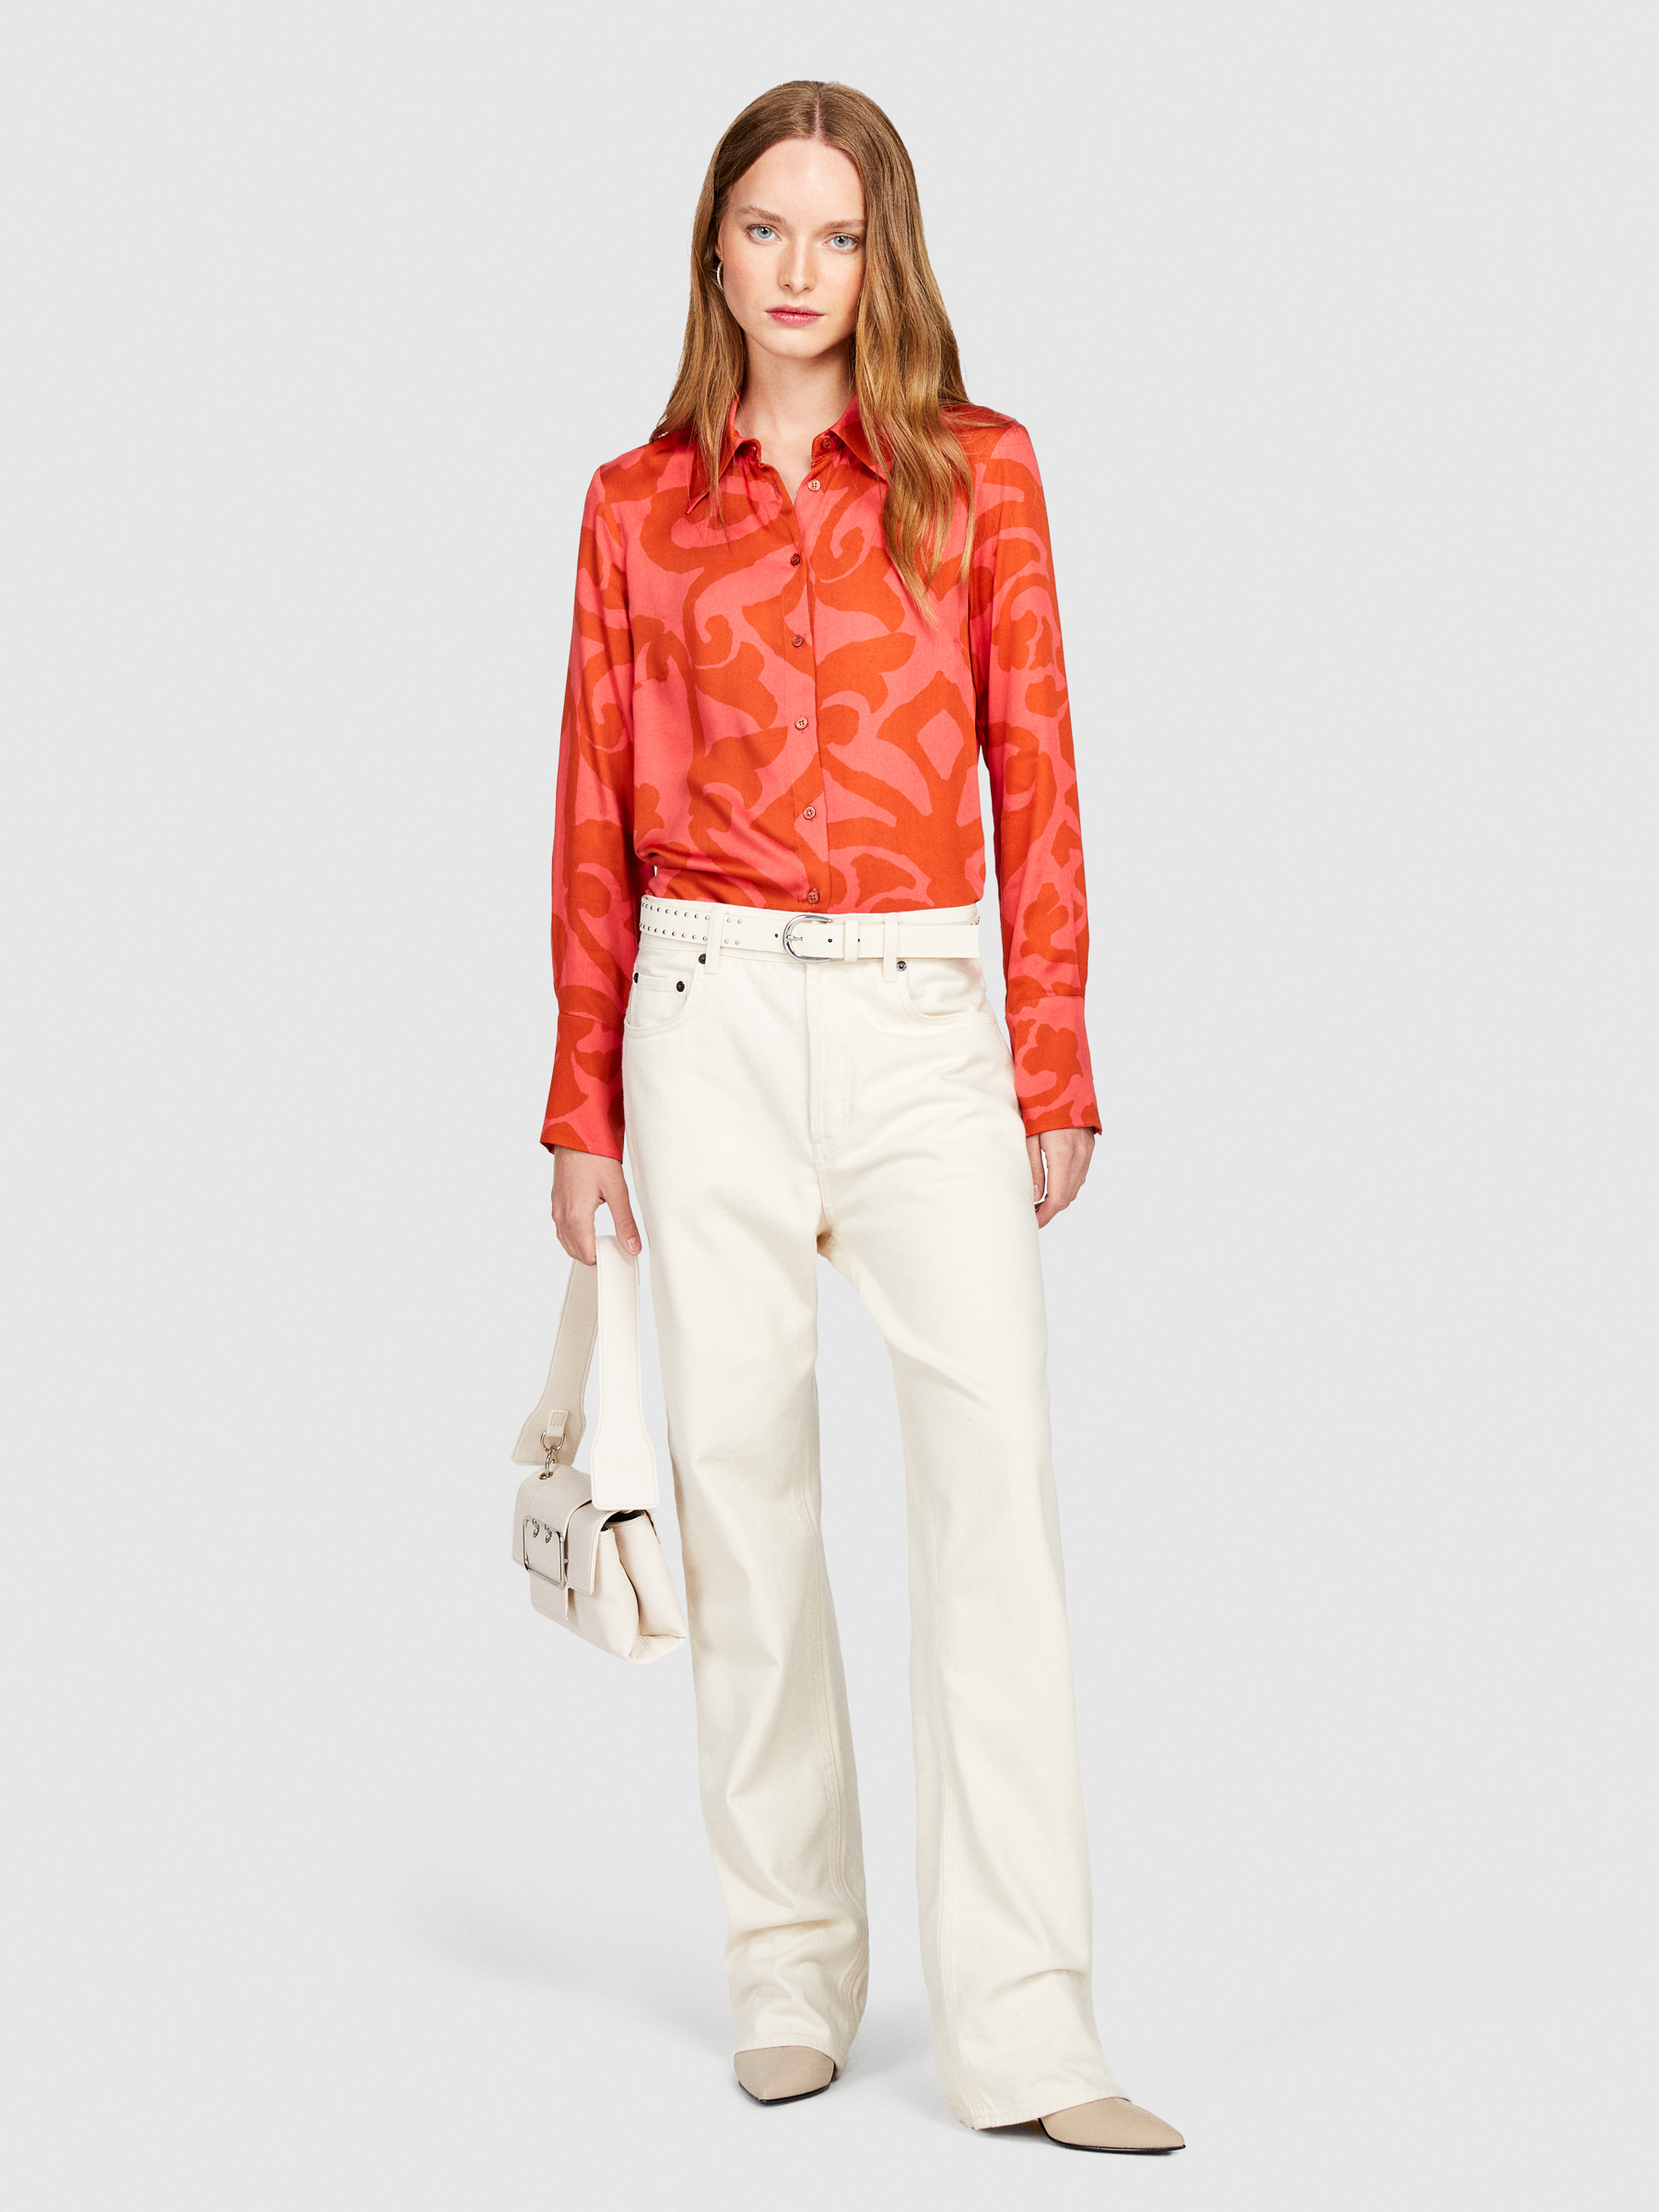 Sisley - Printed Shirt In Satin, Woman, Coral, Size: XS